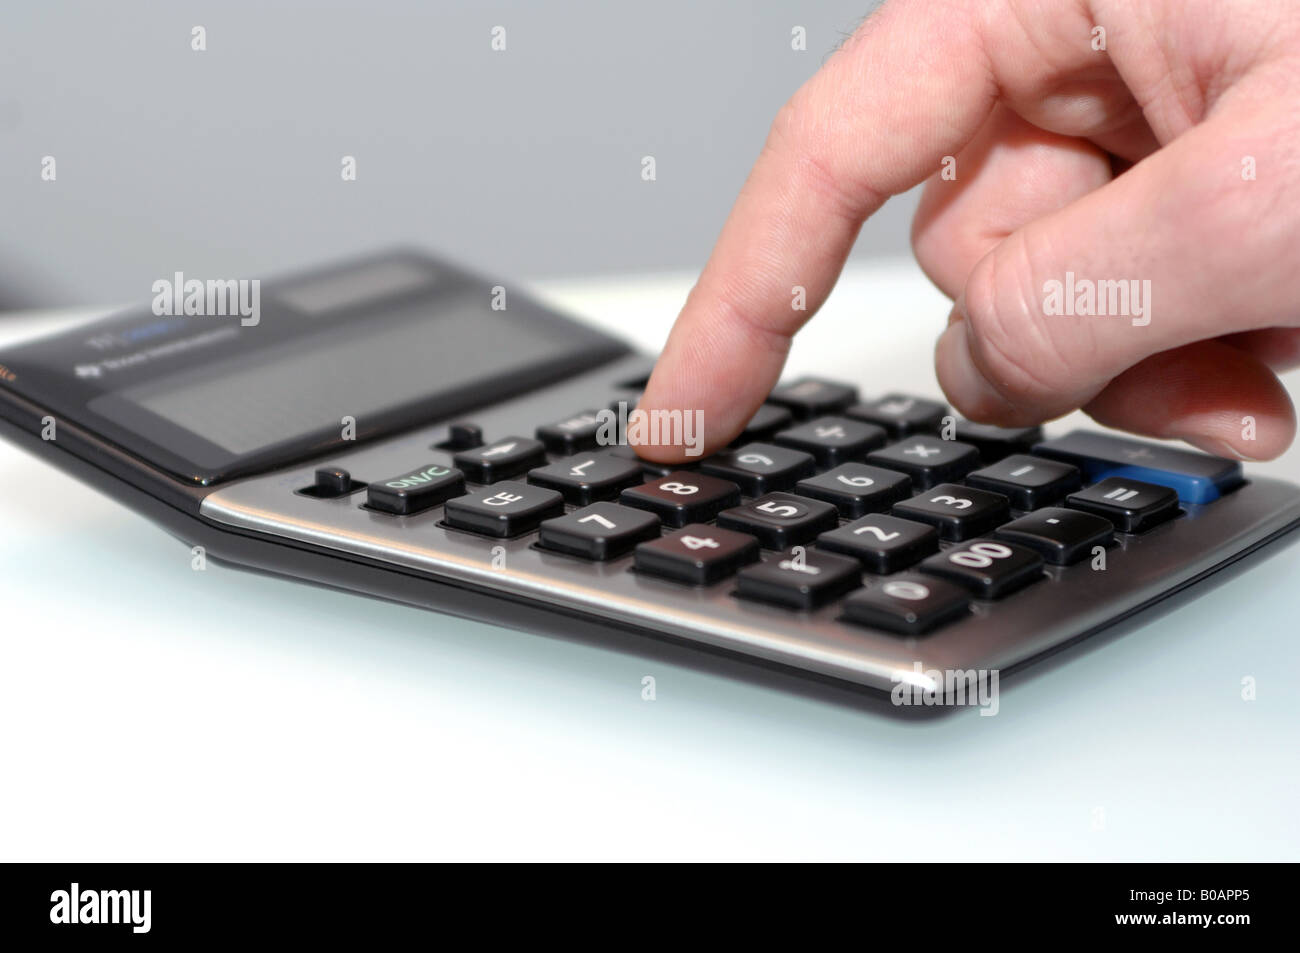 hand operating a calculator Stock Photo